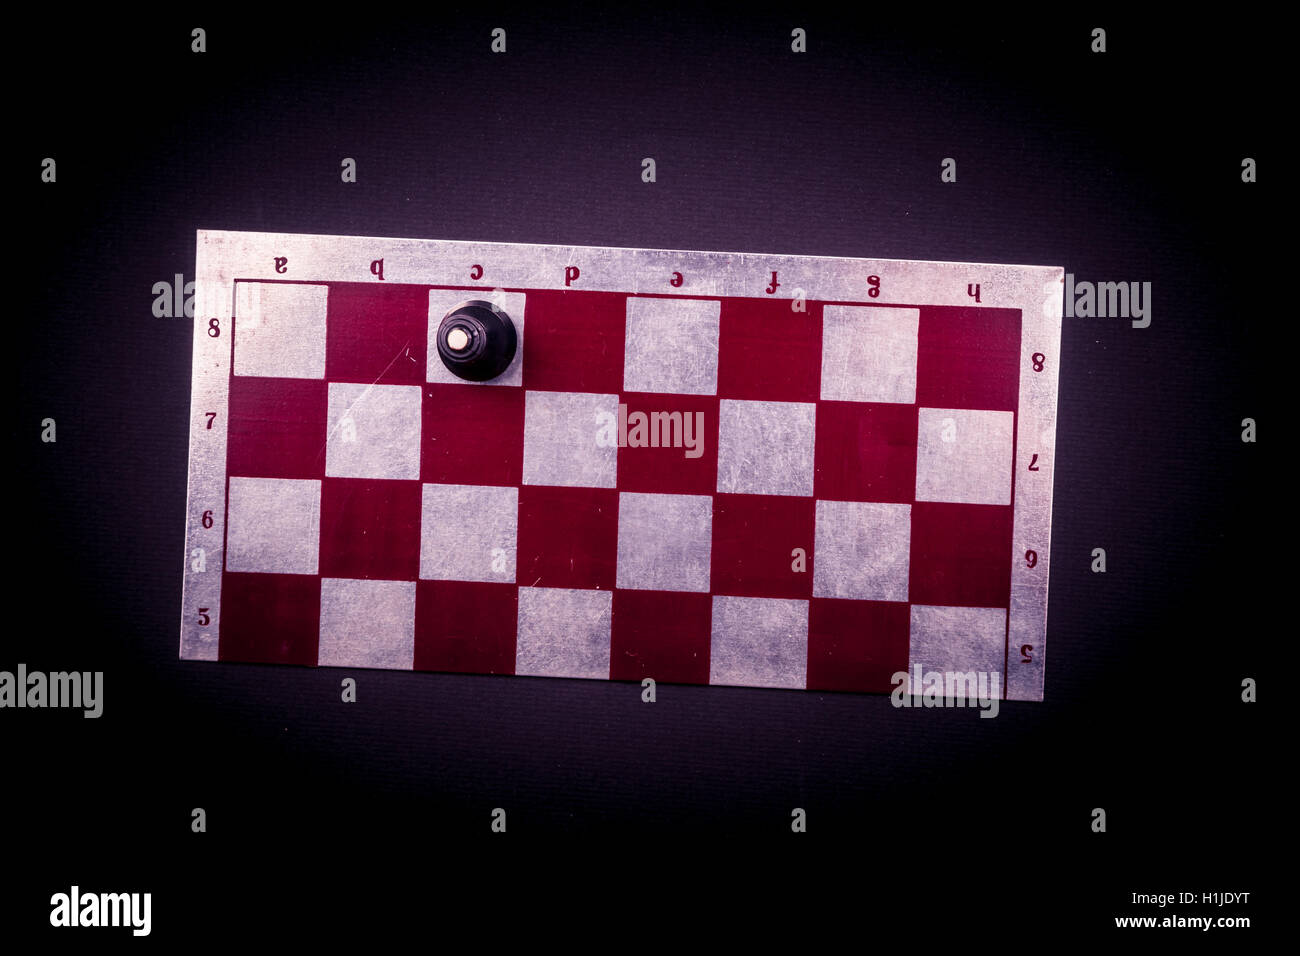 Chess board on dark background. Stock Photo